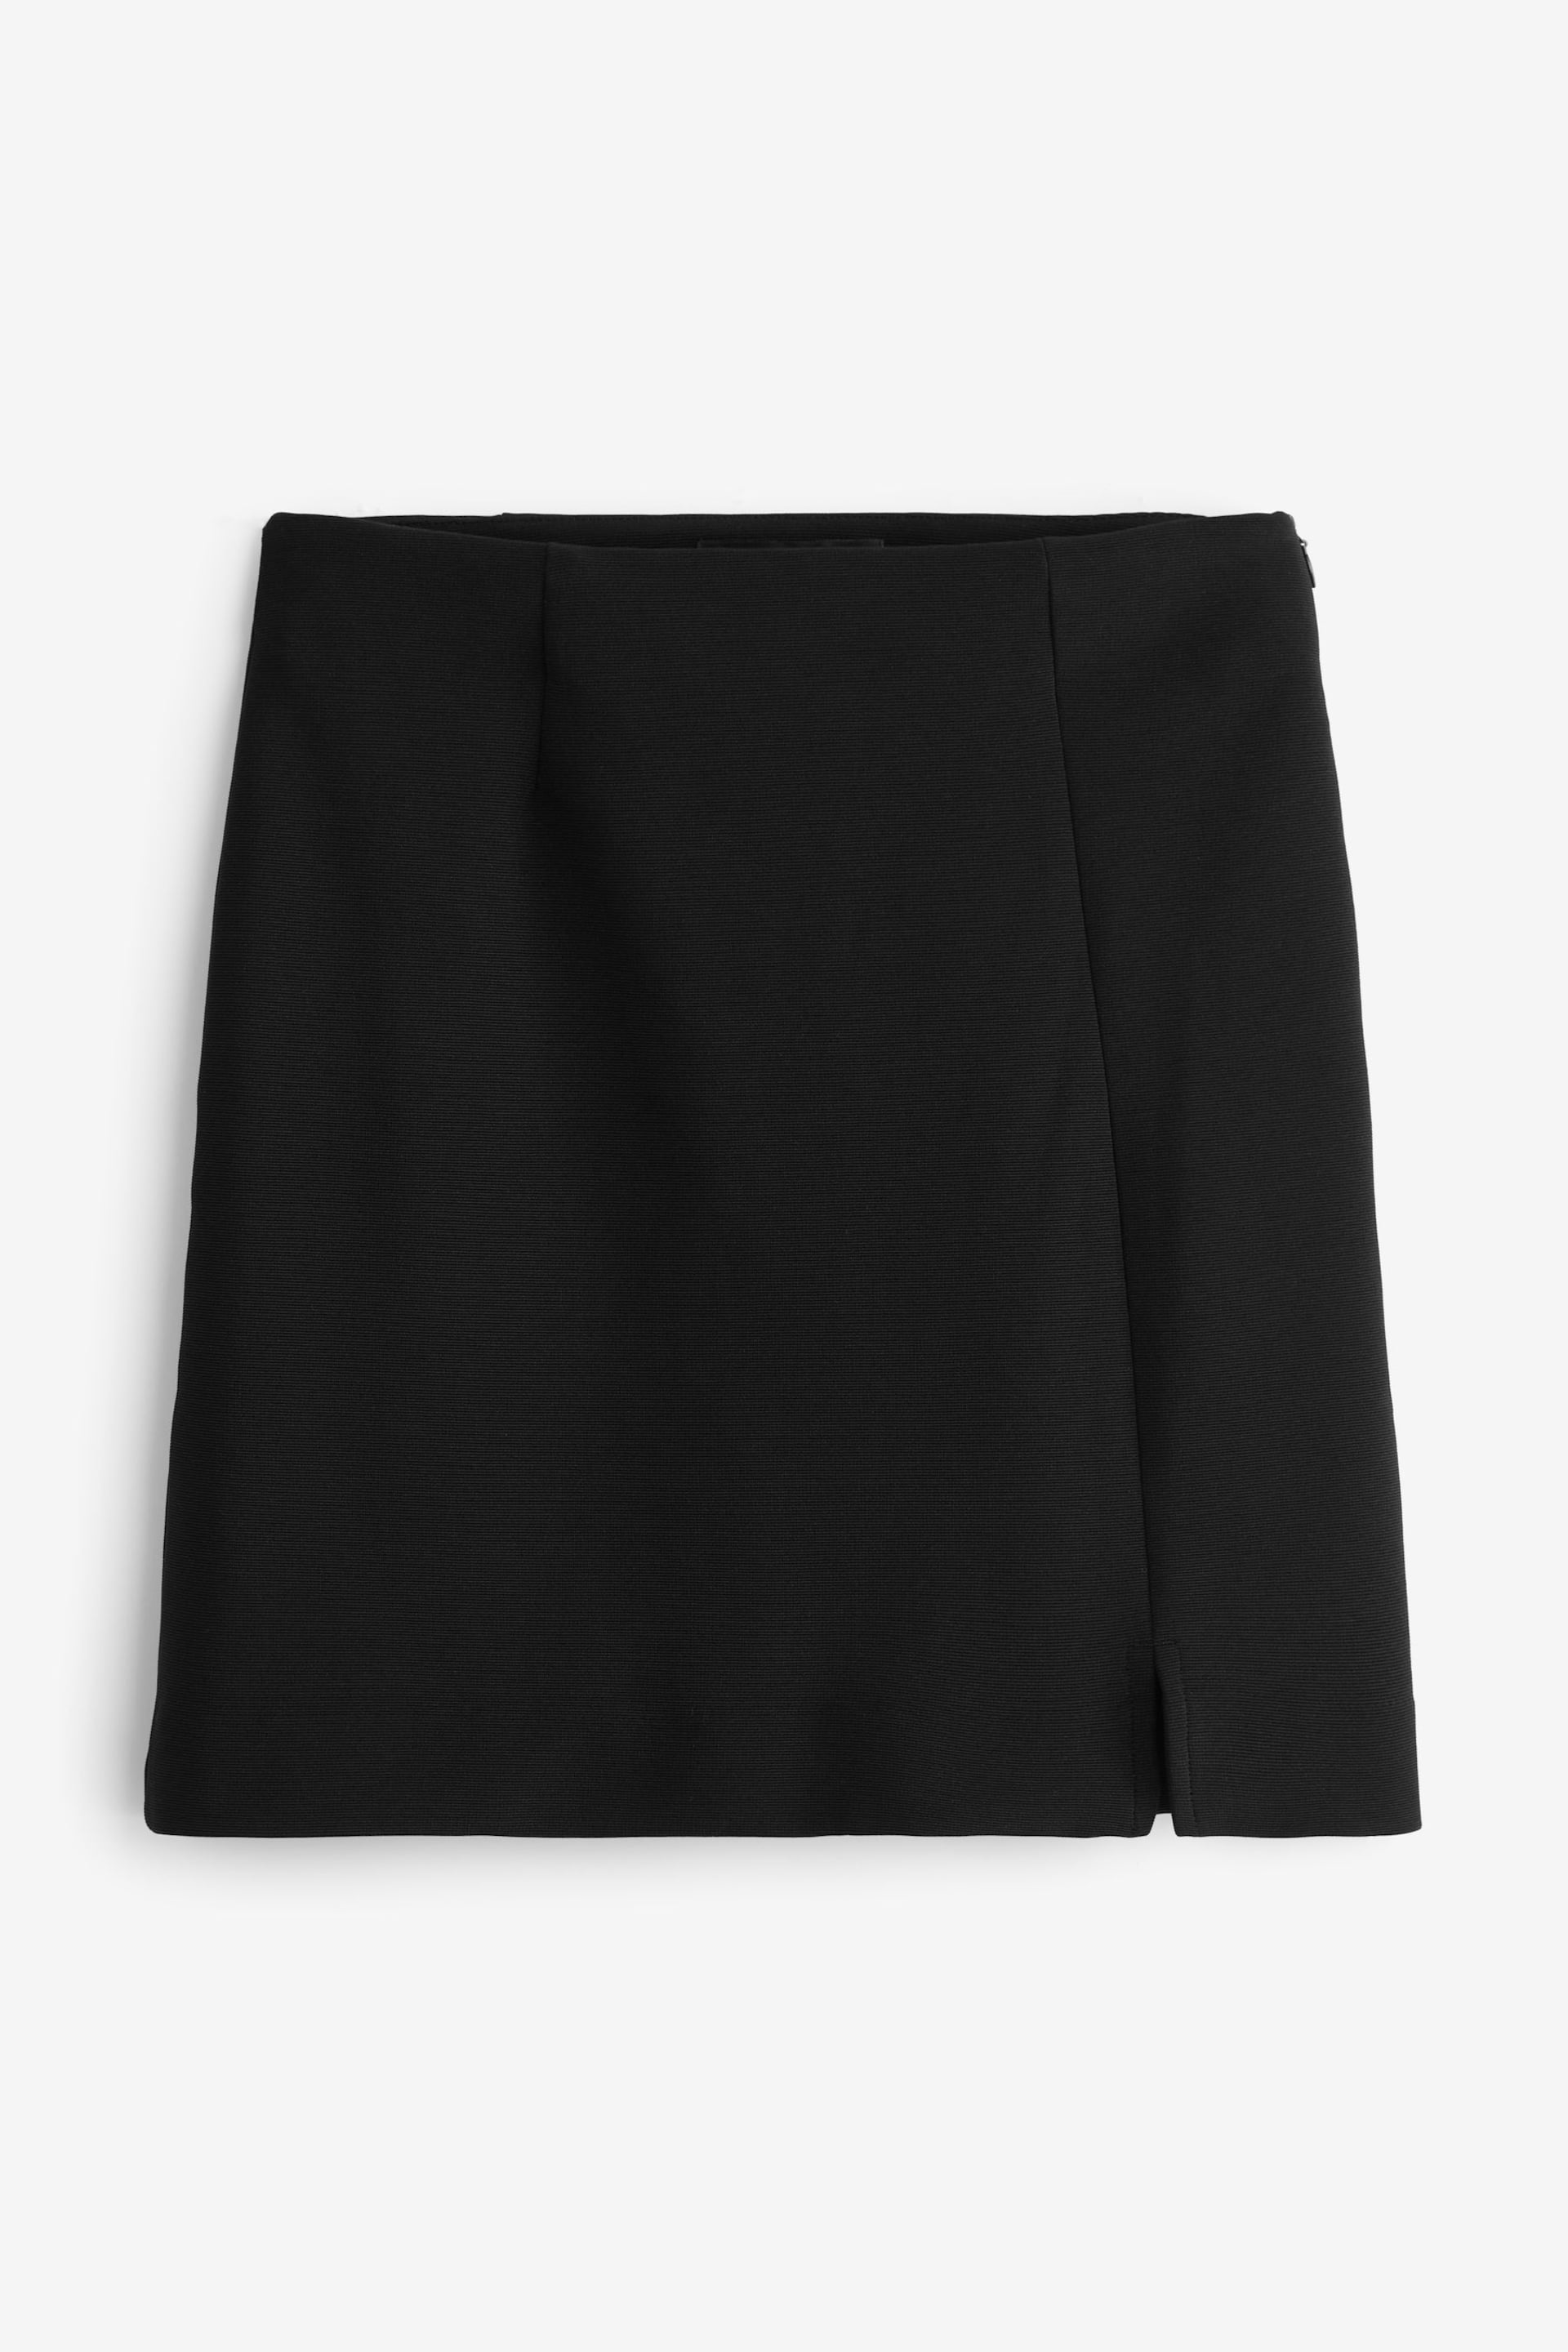 Black A-Line Mini Skirt - Image 5 of 5